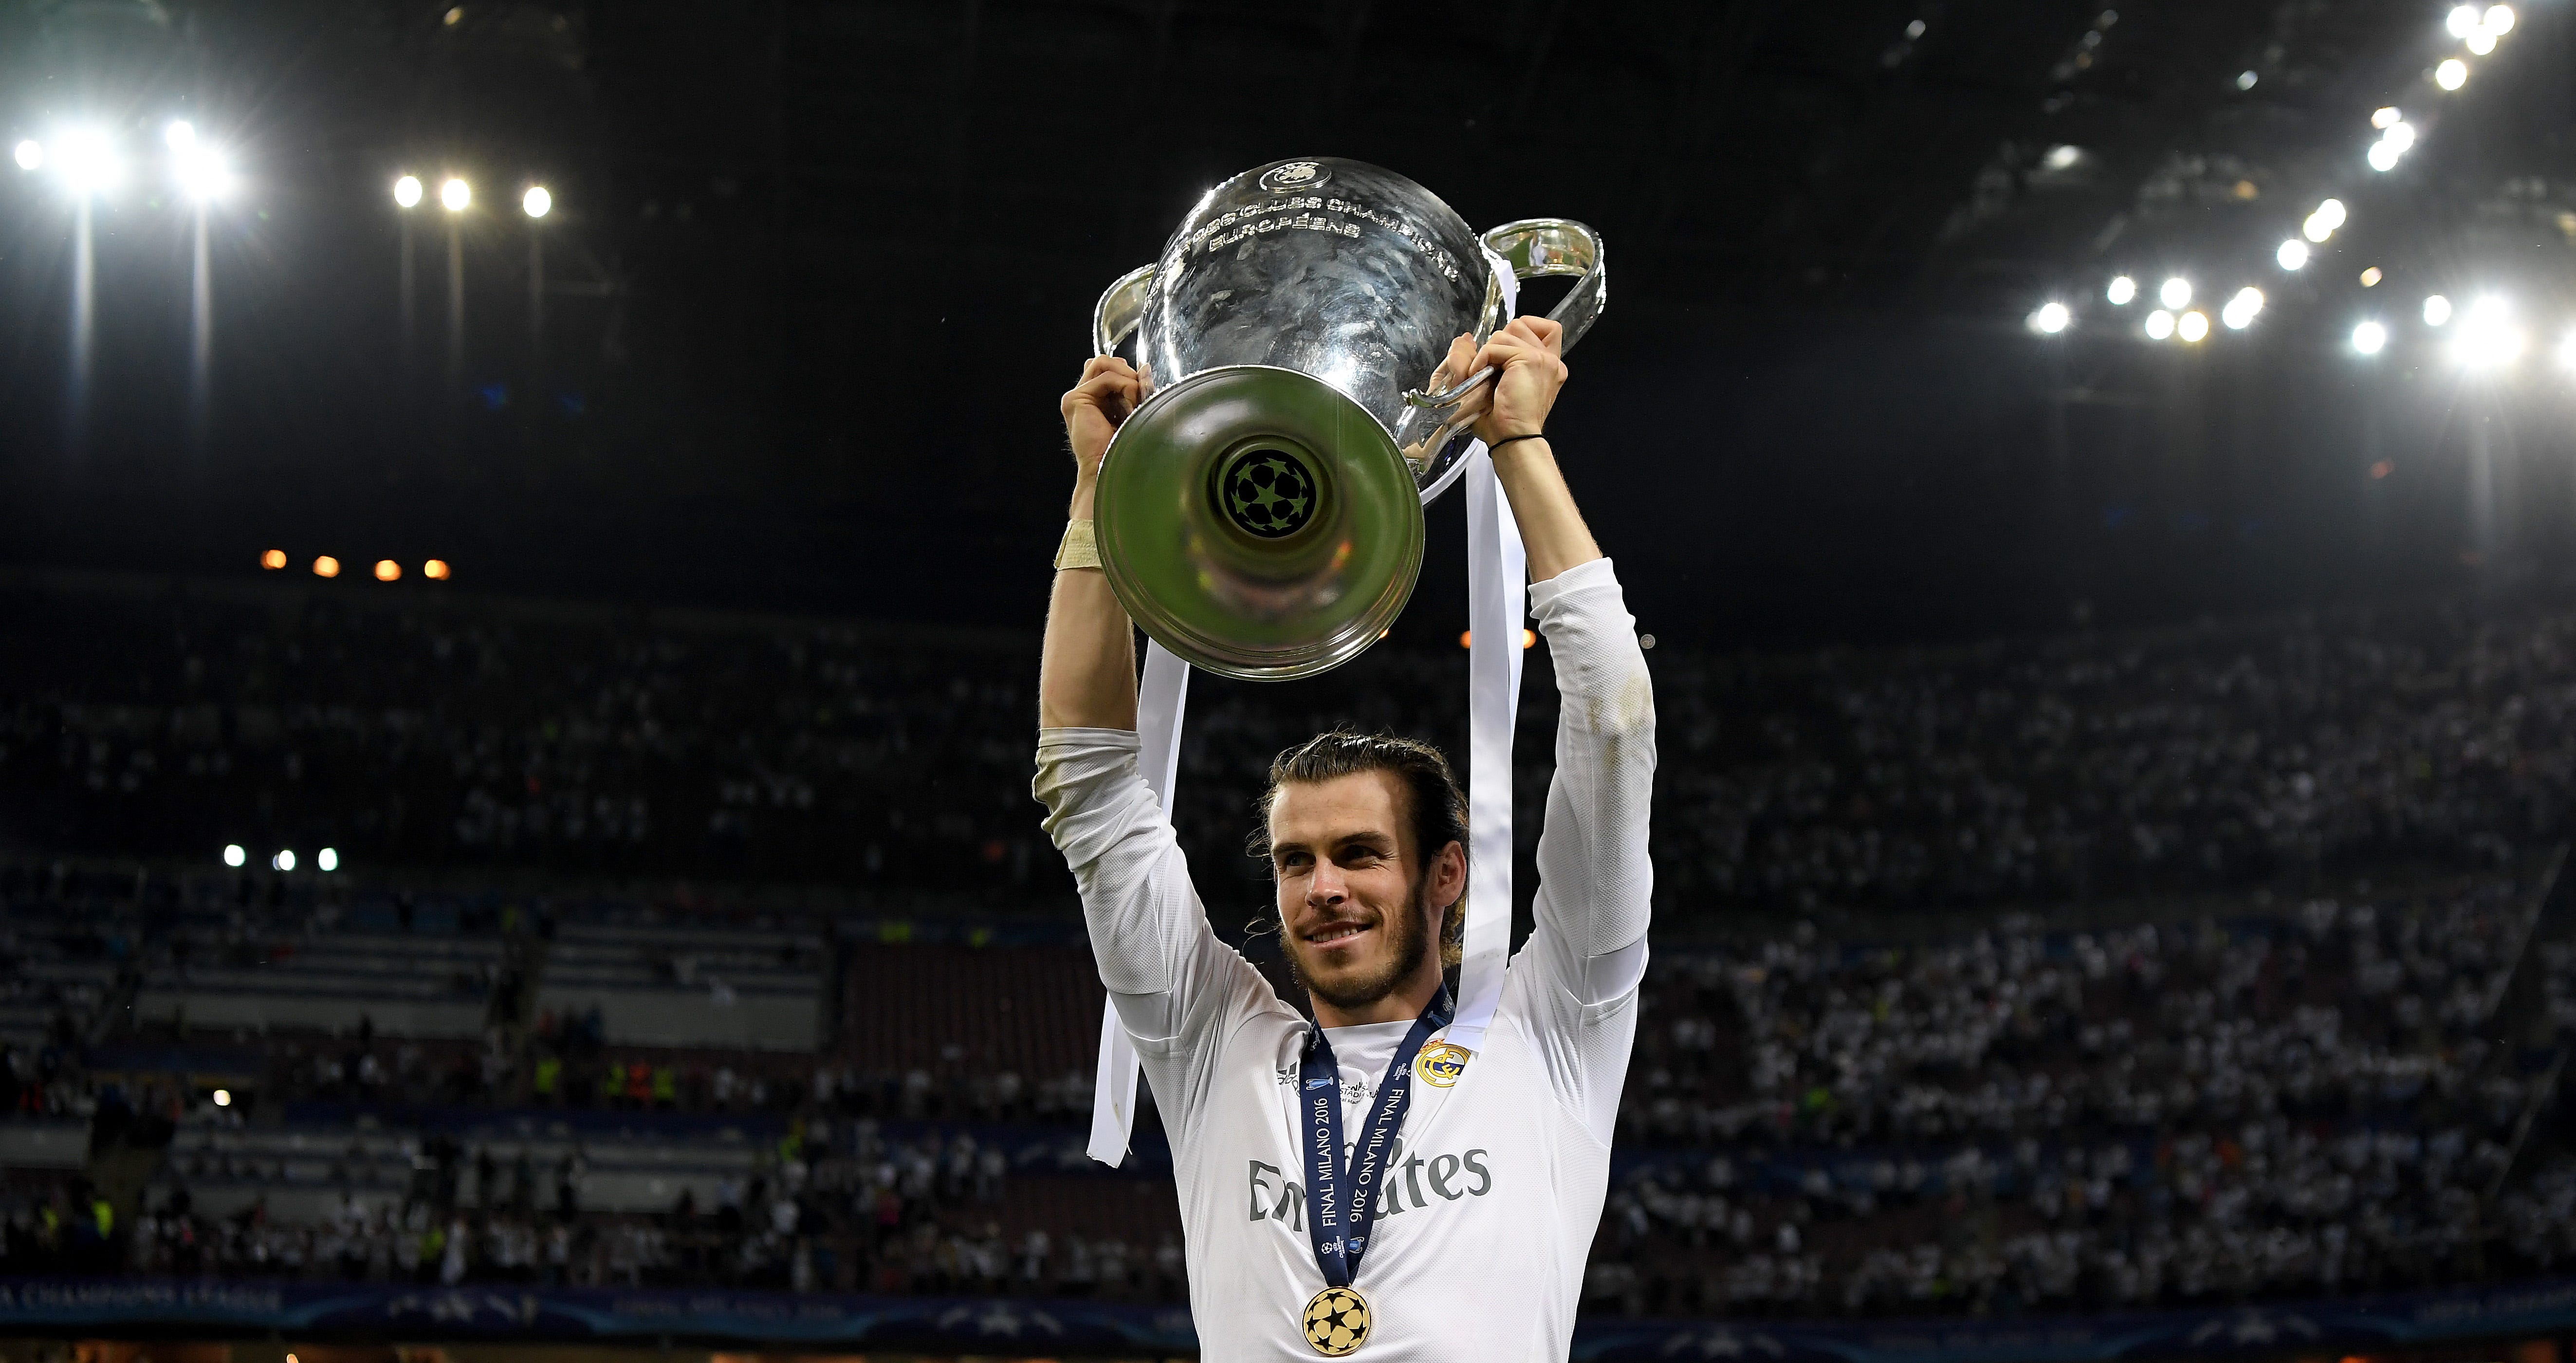 Gareth Bale Champions League trophy